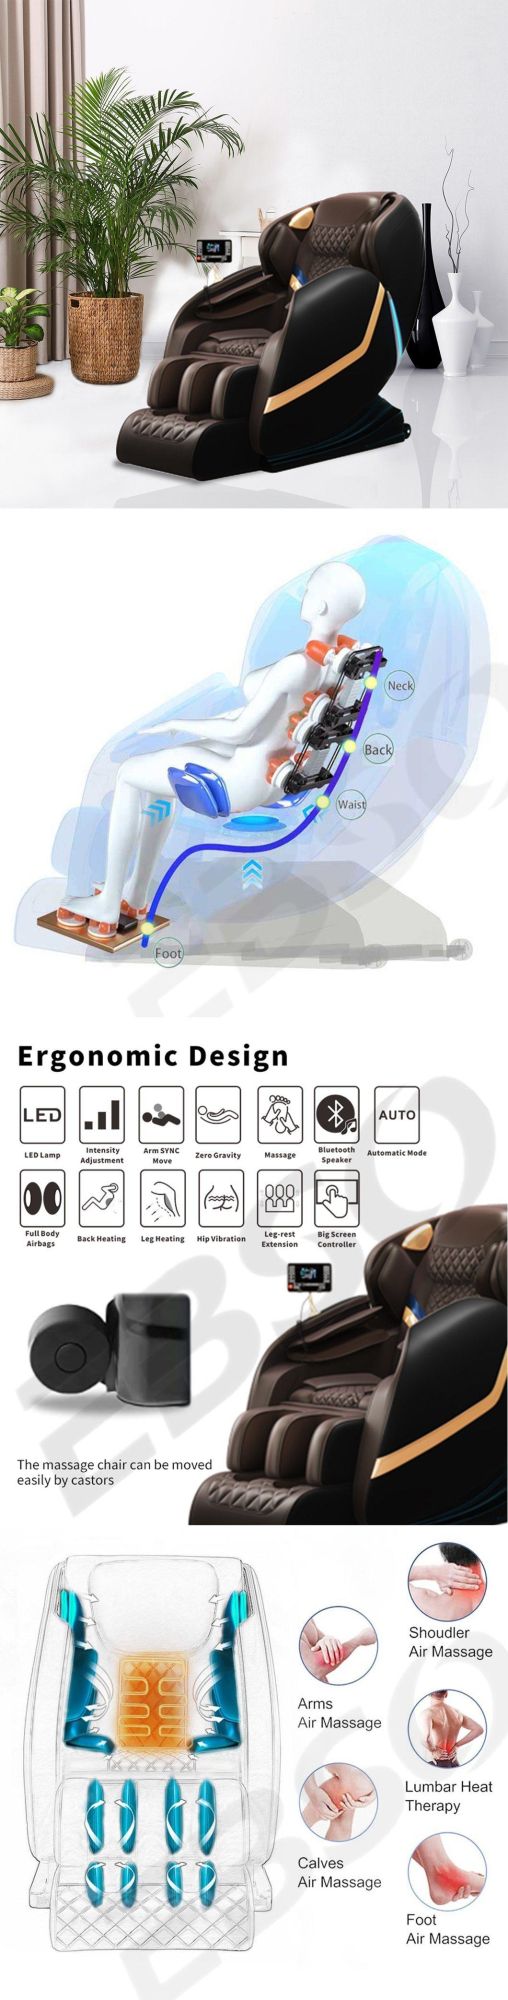 Portable SPA Cheap Price Full Body Luxury Leather Electric Zero Gravity Massage Chair